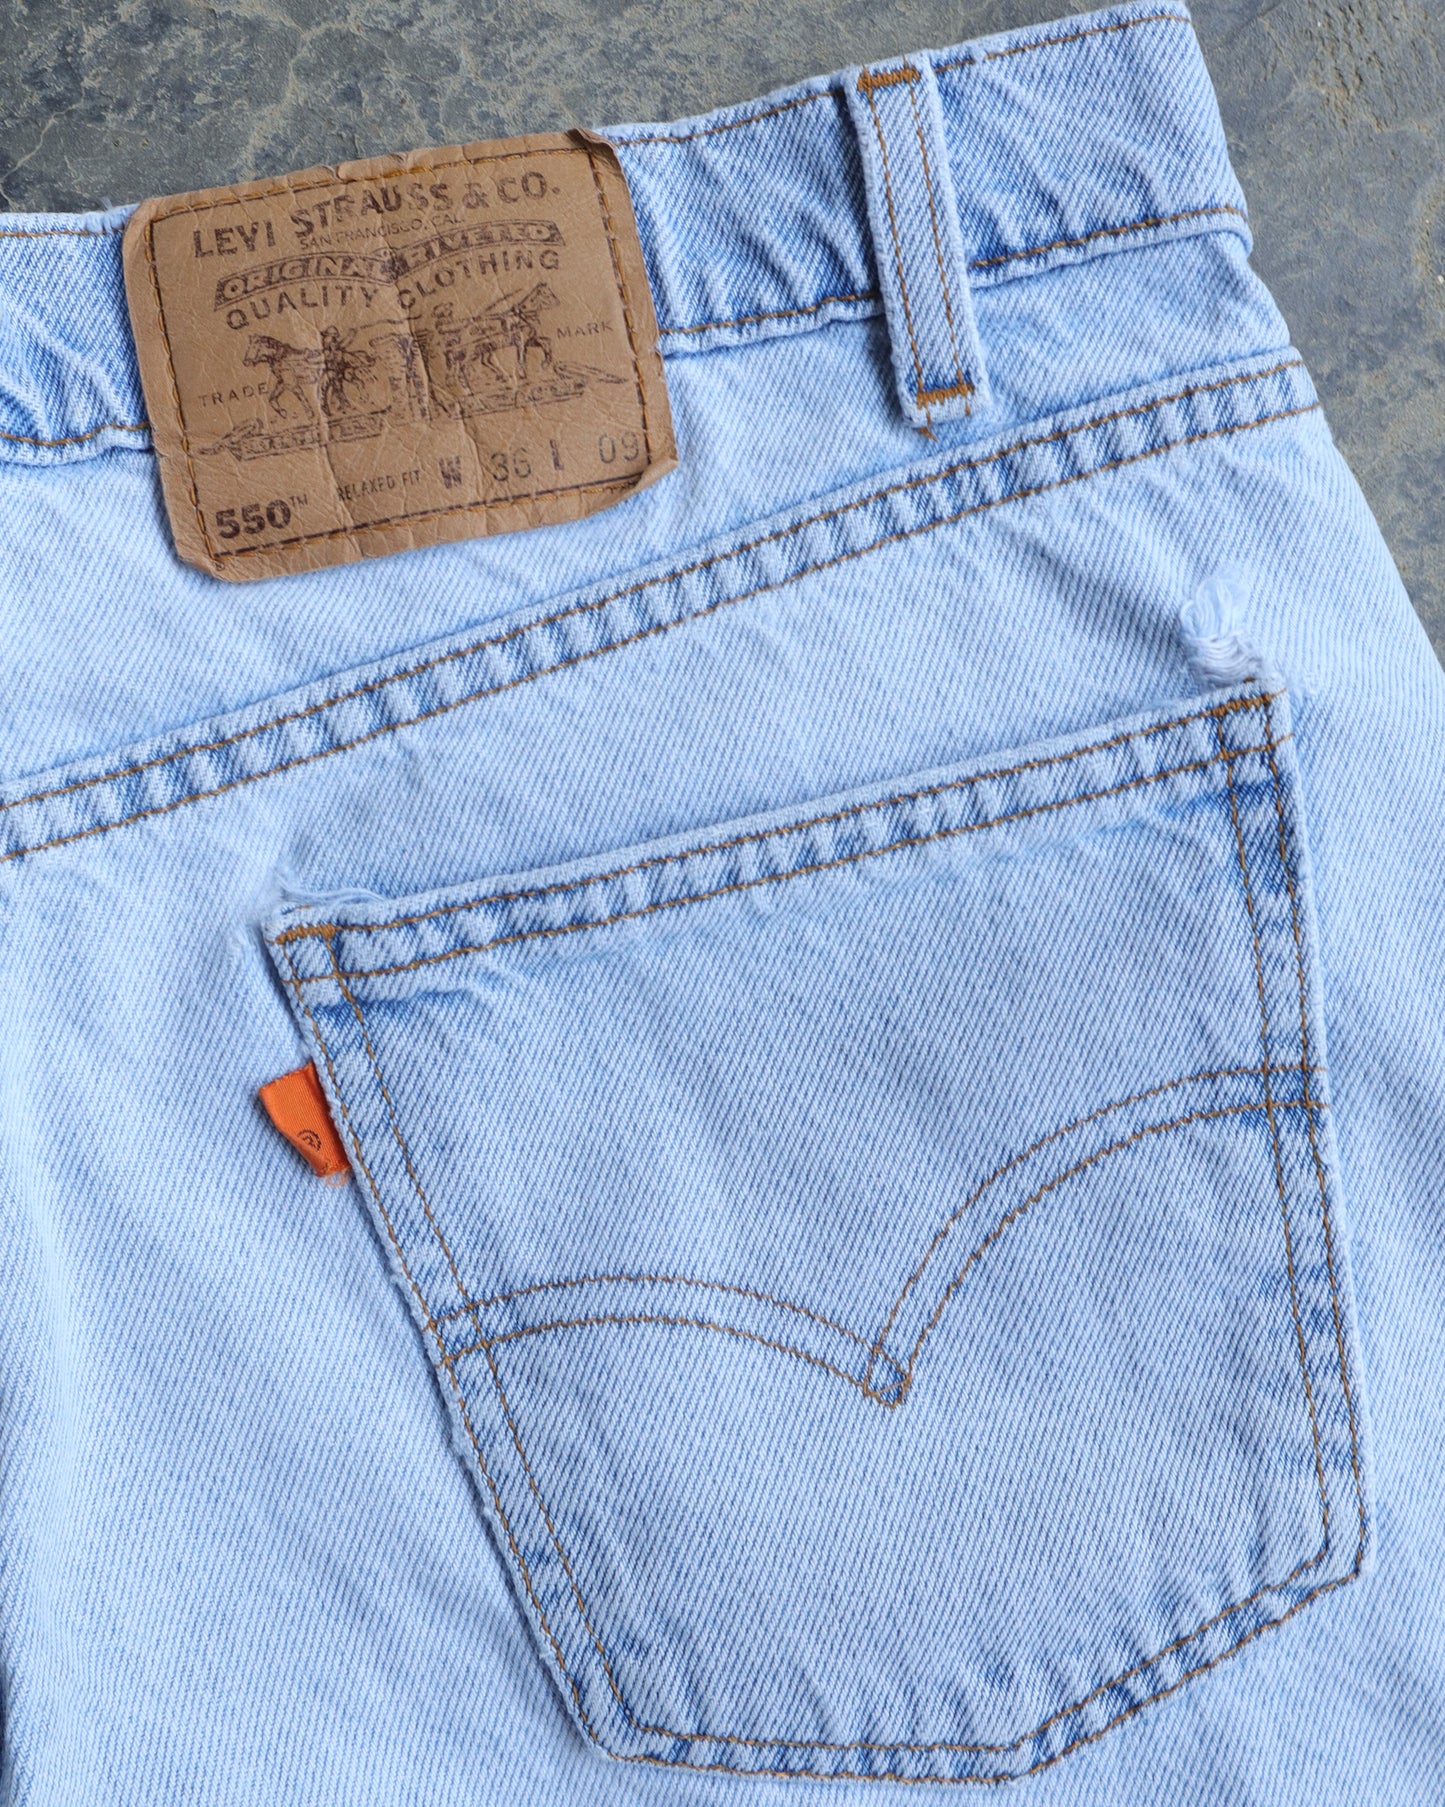 90s Levis Orange Tab Cut Shorts - 36